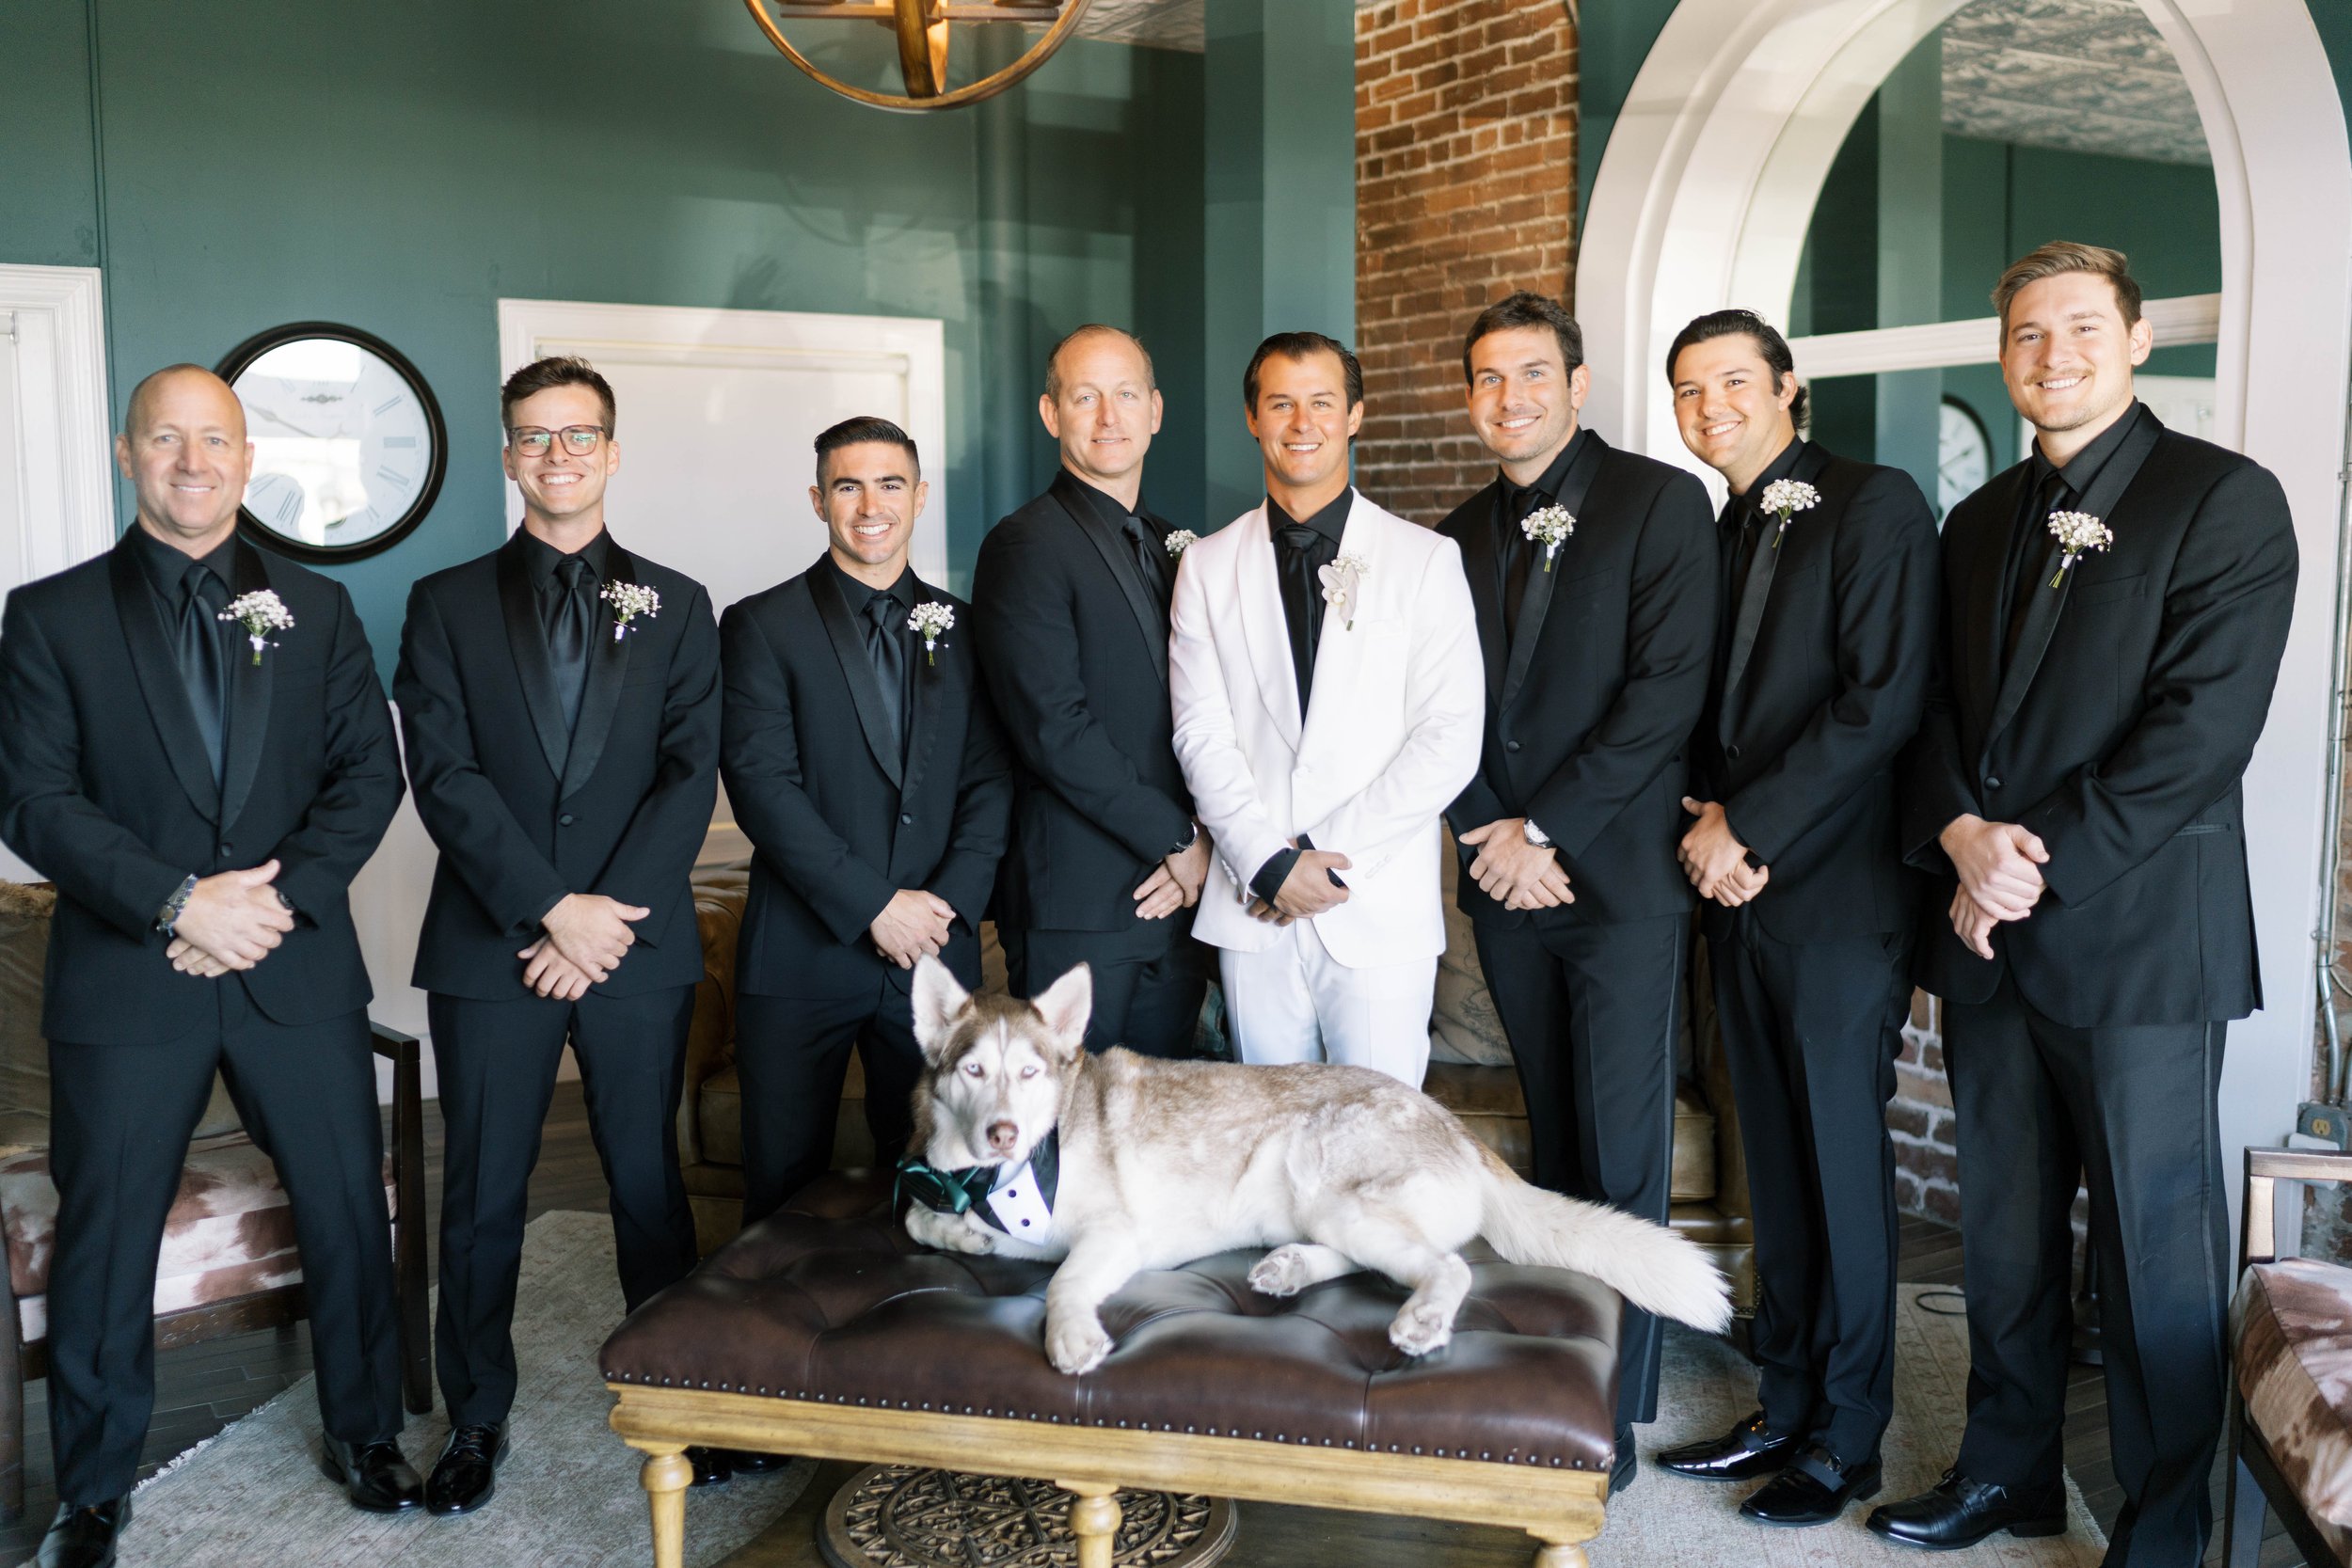 st-augustine-groomsmen-photos.jpg